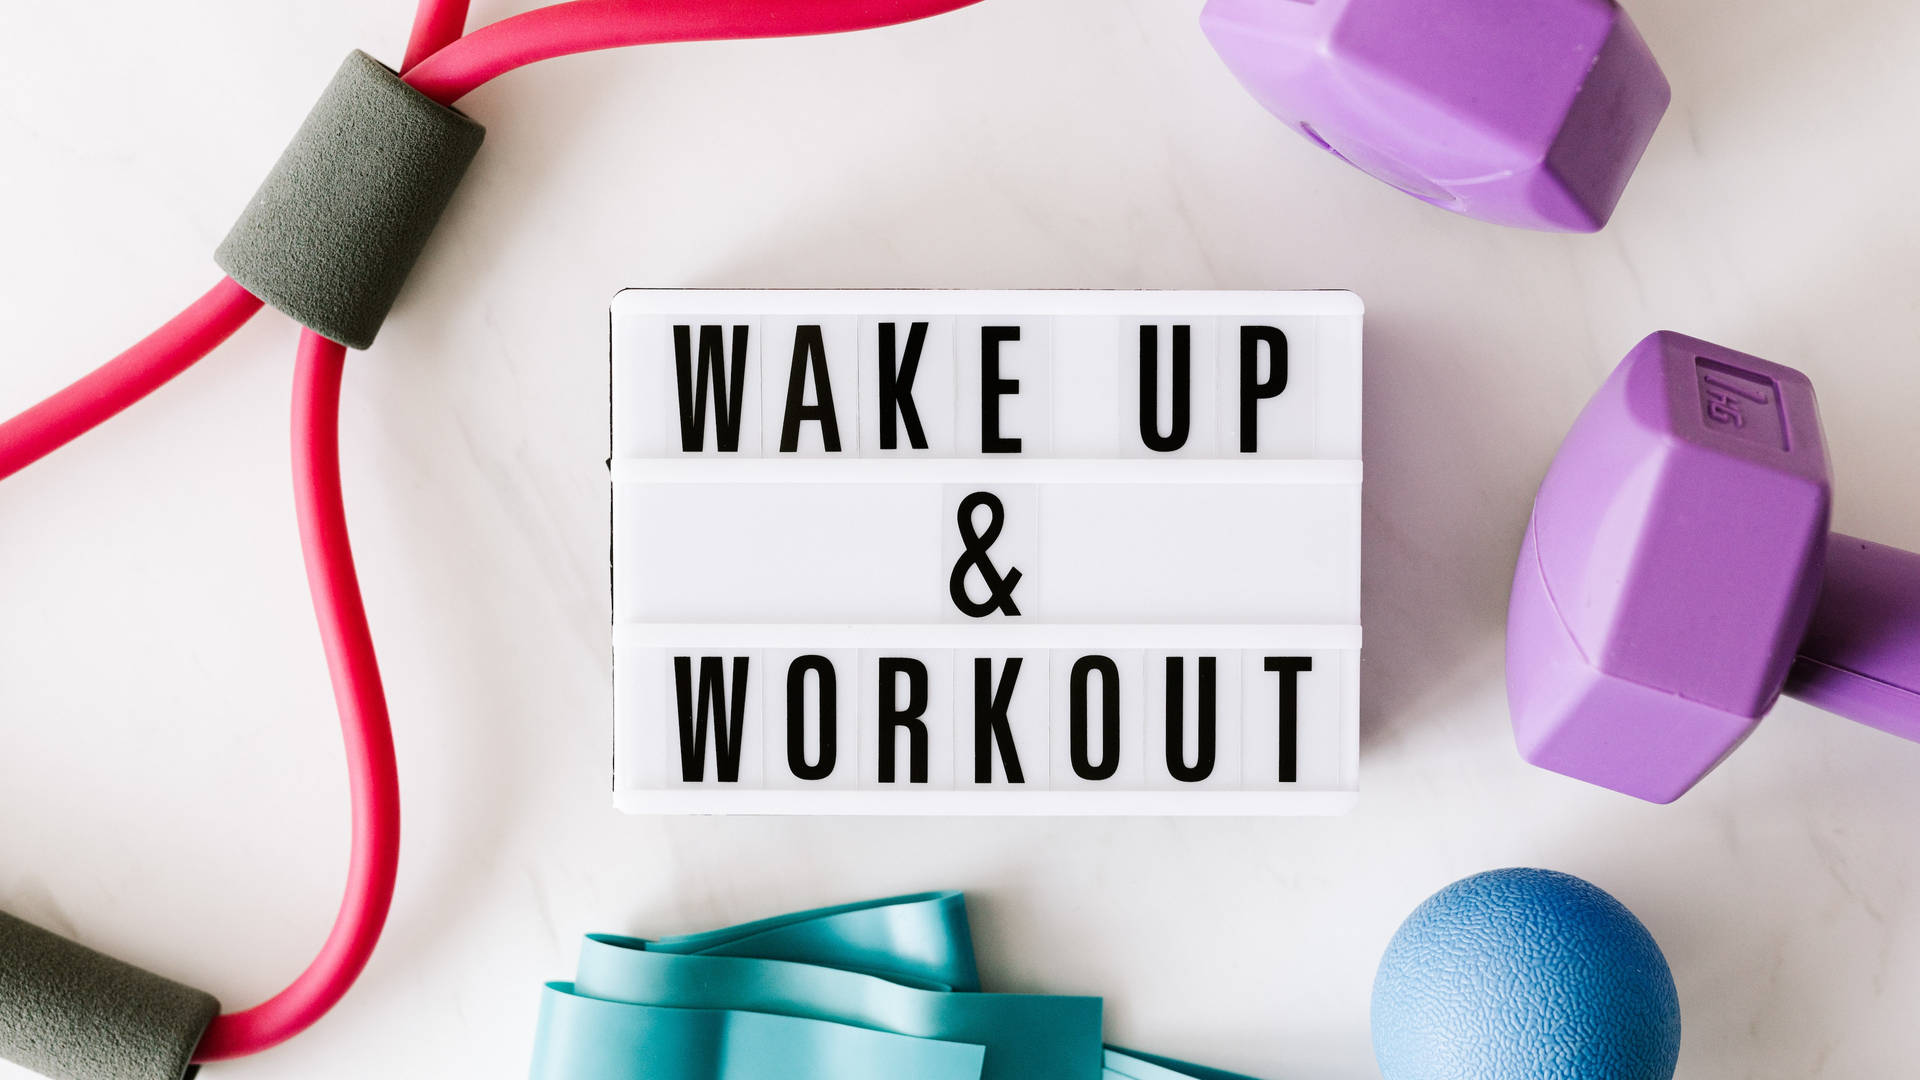 Wake Up 4k Ultra Hd Motivational Wallpaper